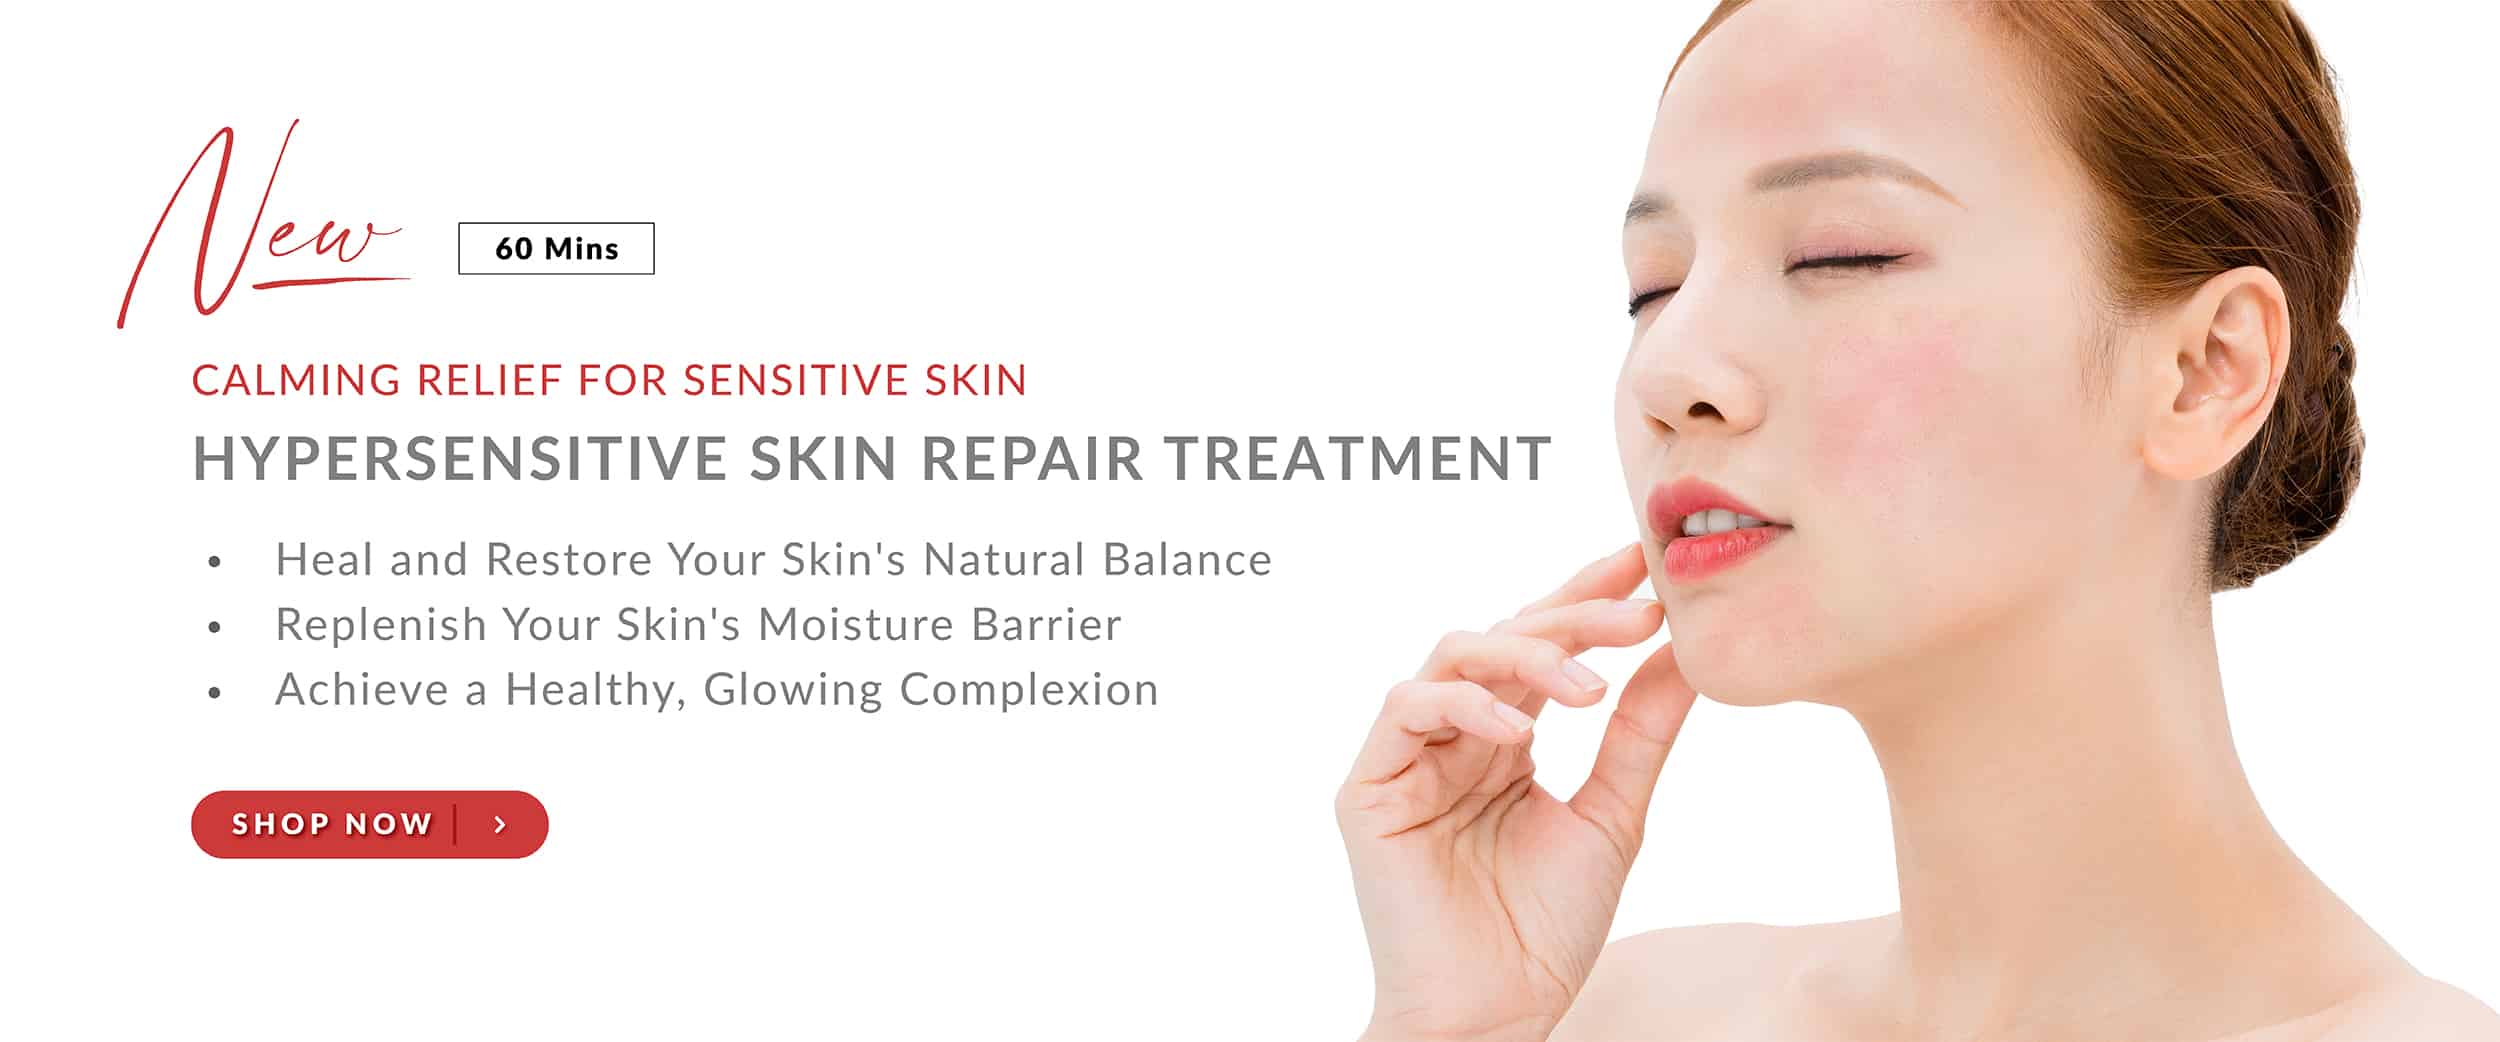 Web Banner_Hypersenitive skin repair